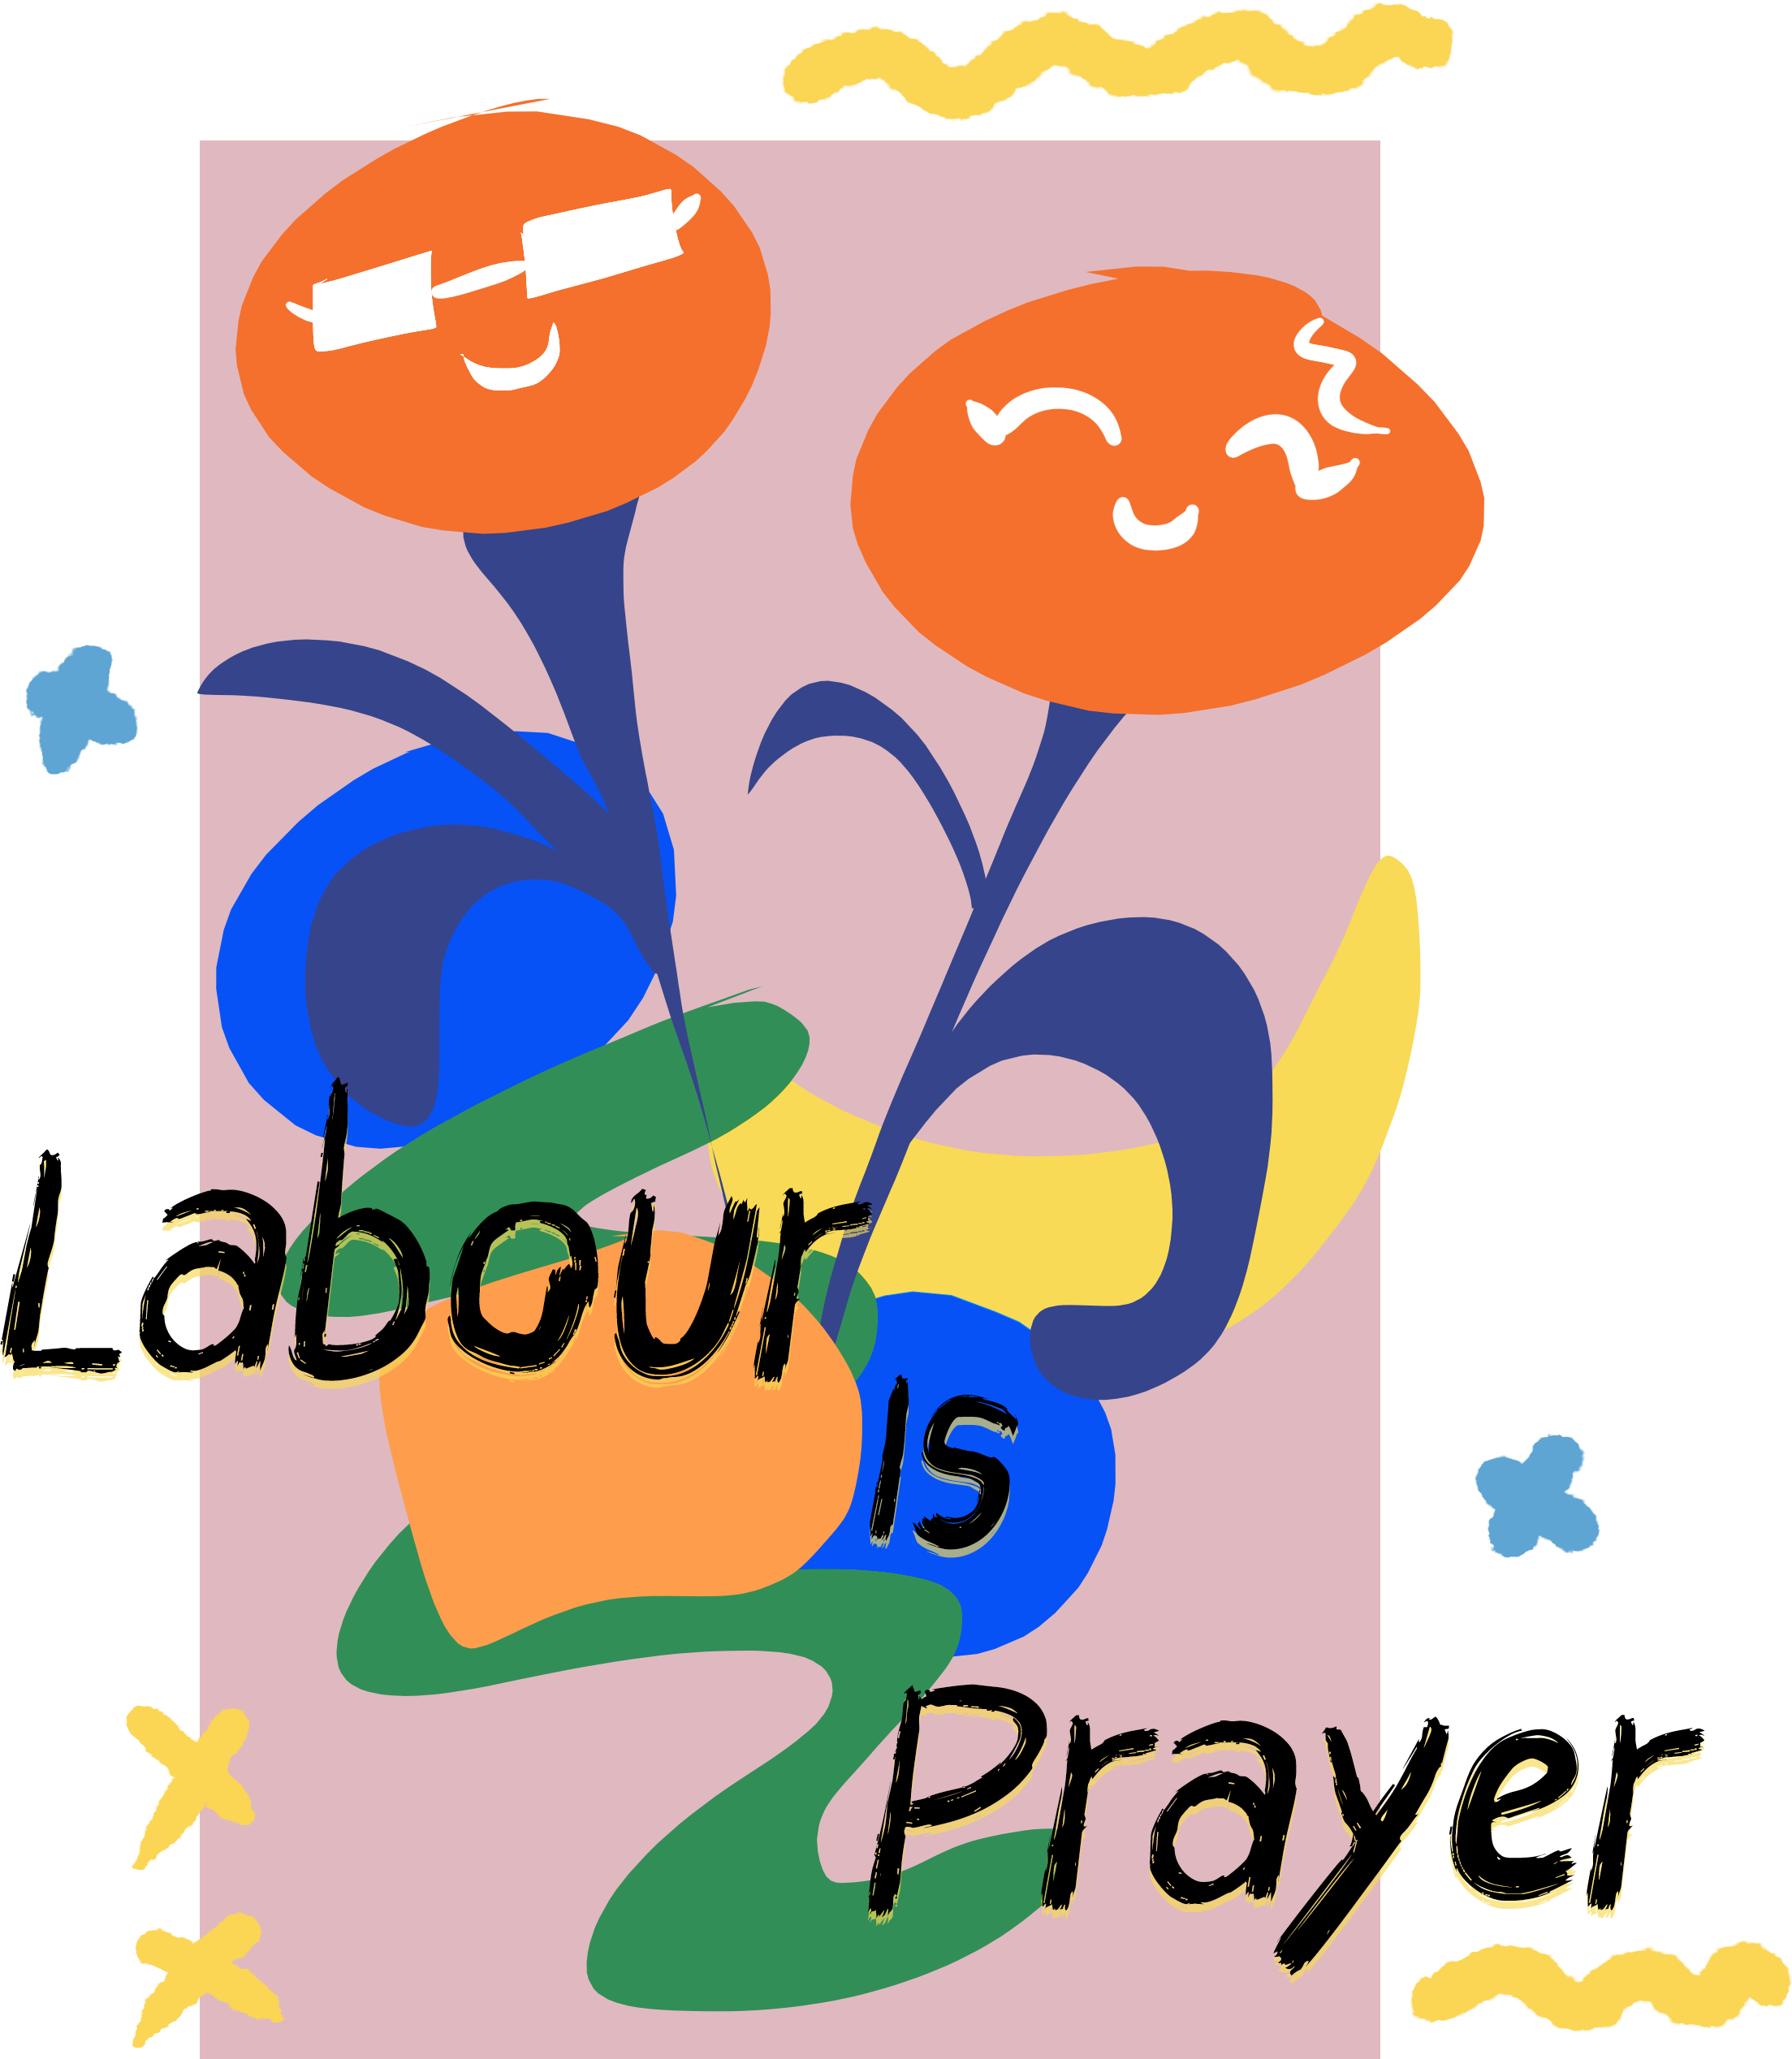 Labour is Prayer Oversized Edit